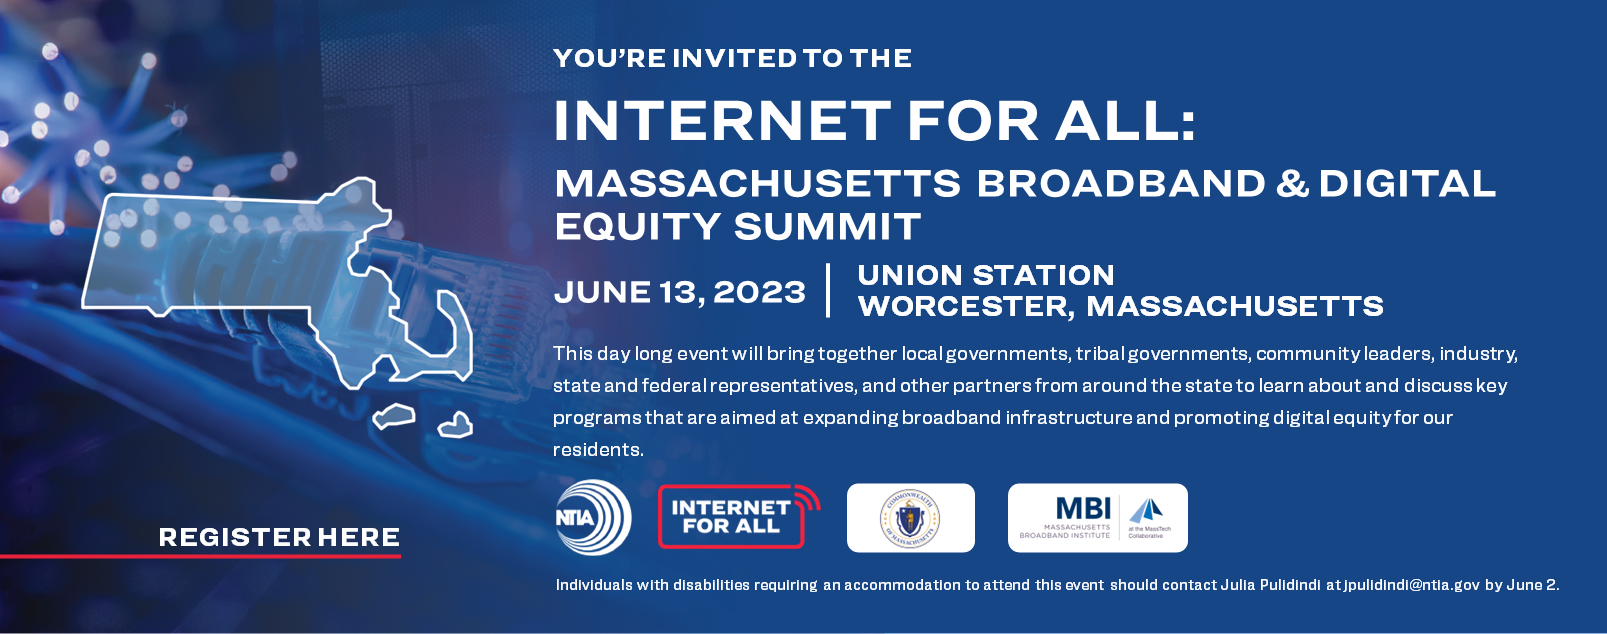 Digital Equity Summit Invitation